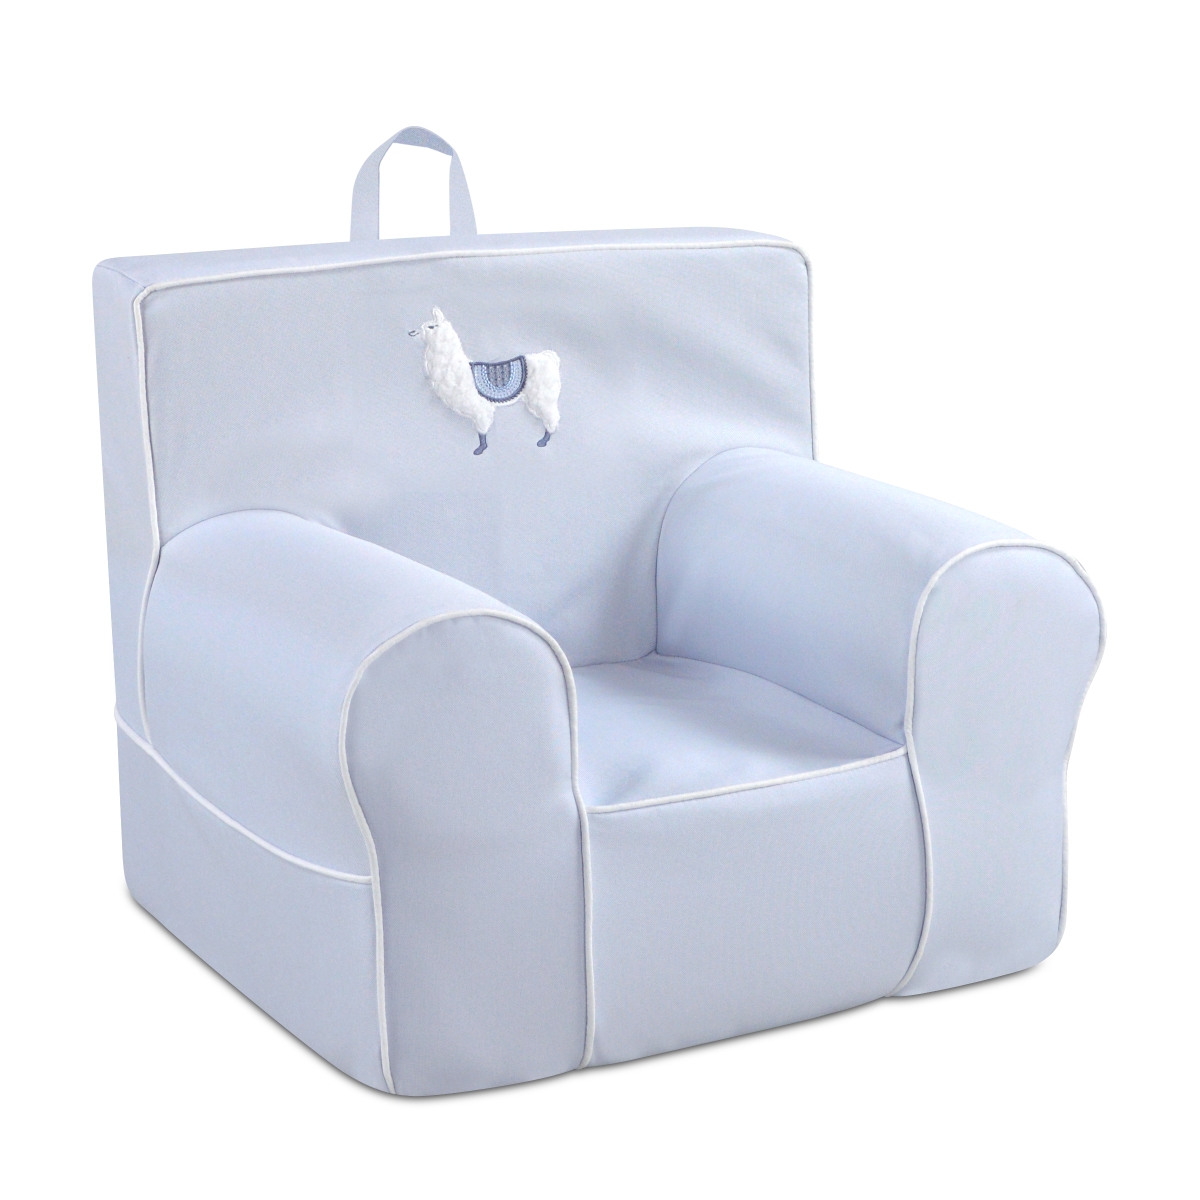 Kangaroo Trading 4071blma Appliqued Grab-n-go Foam Kids Chair With Handle, Blue & White - 8 X 13 X 15.5 In.